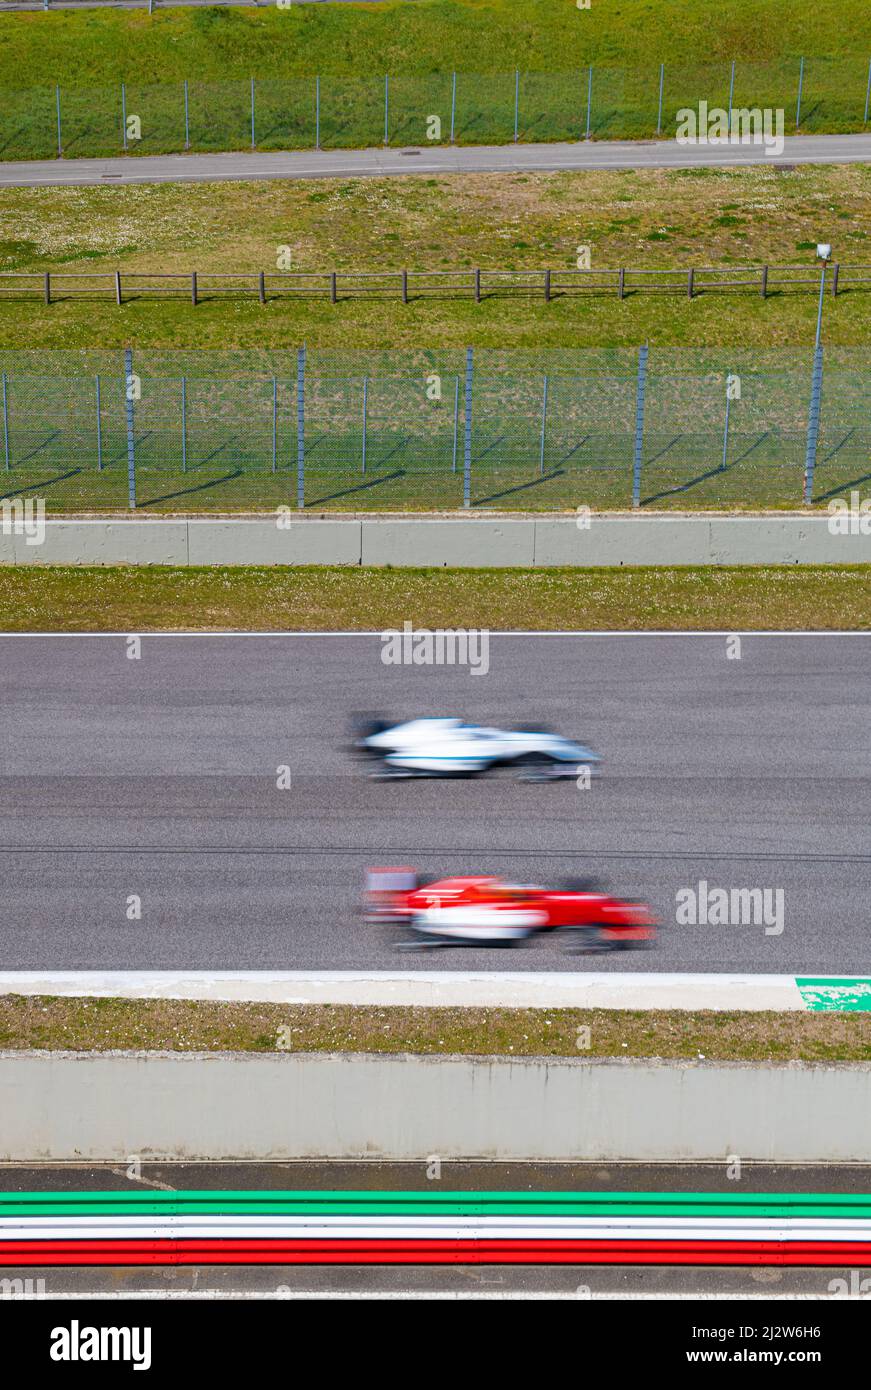 Concepto de competición de fondo, coches de carreras borrosas velocidad en asfalto circuito pista Foto de stock